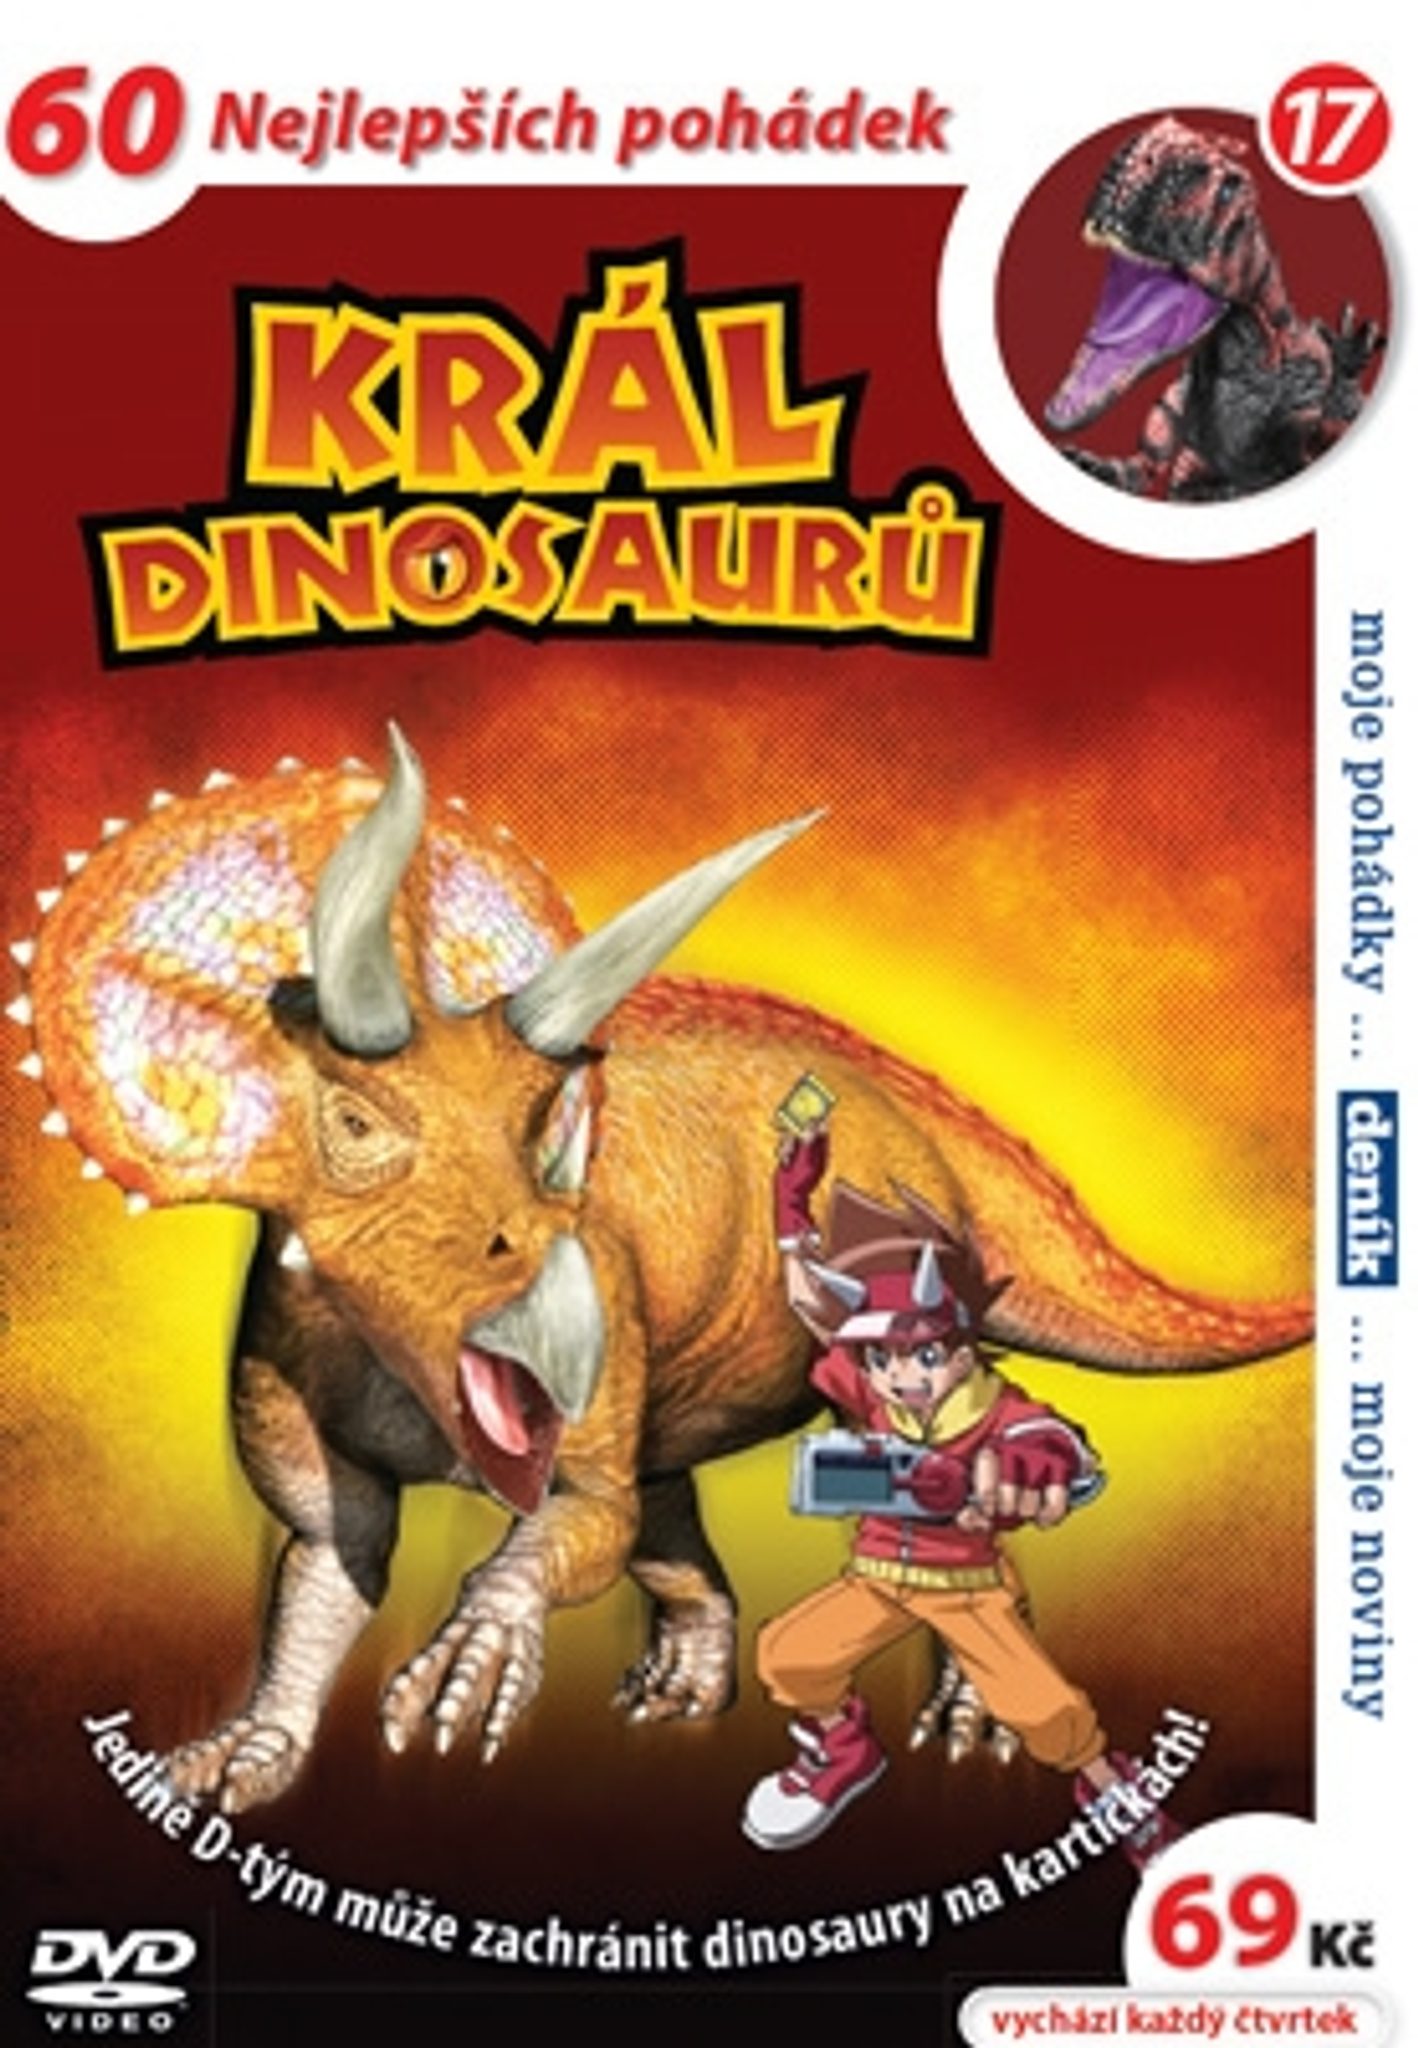 DVD Krl dinosaur 17